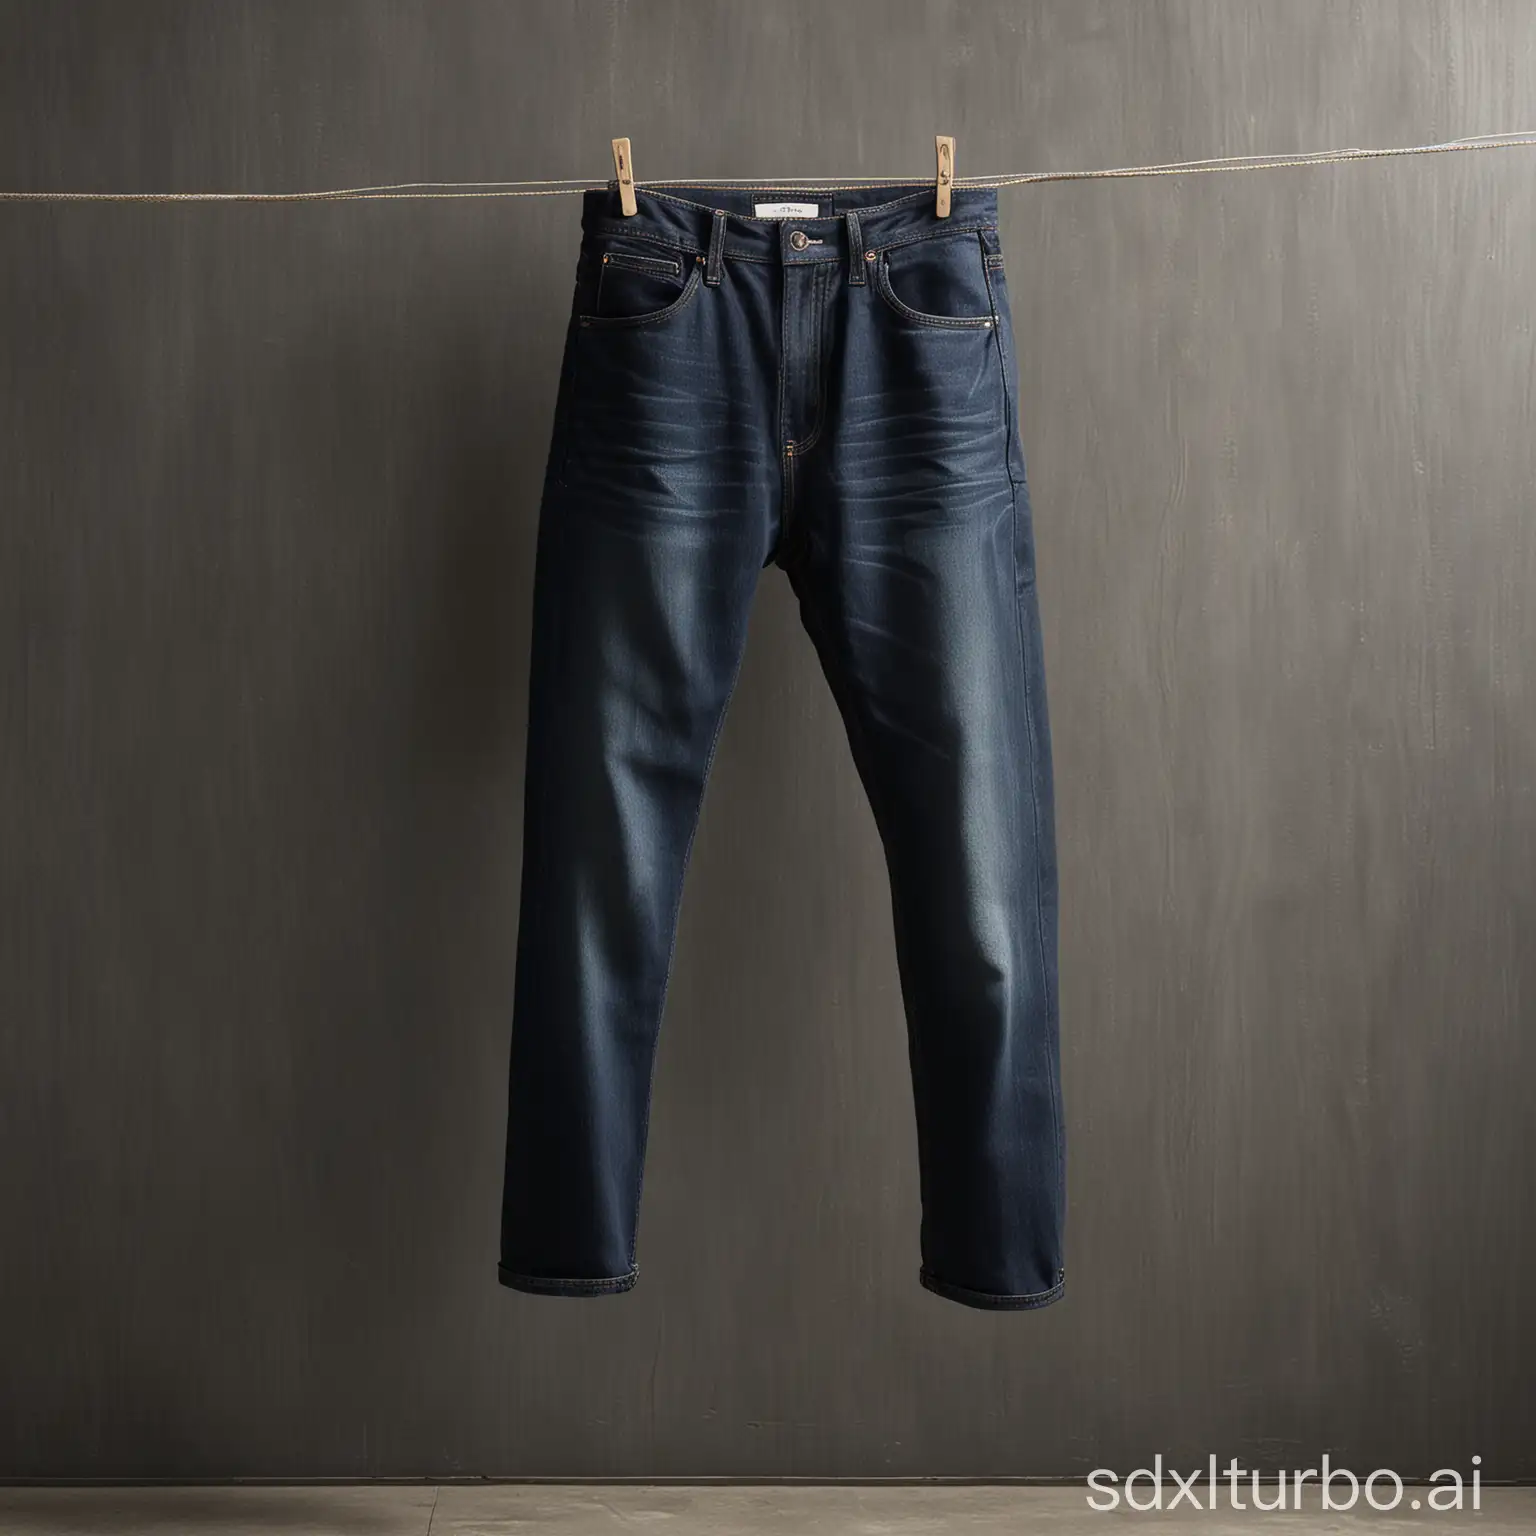 Dark-Denim-Jeans-Hanging-on-Clothesline